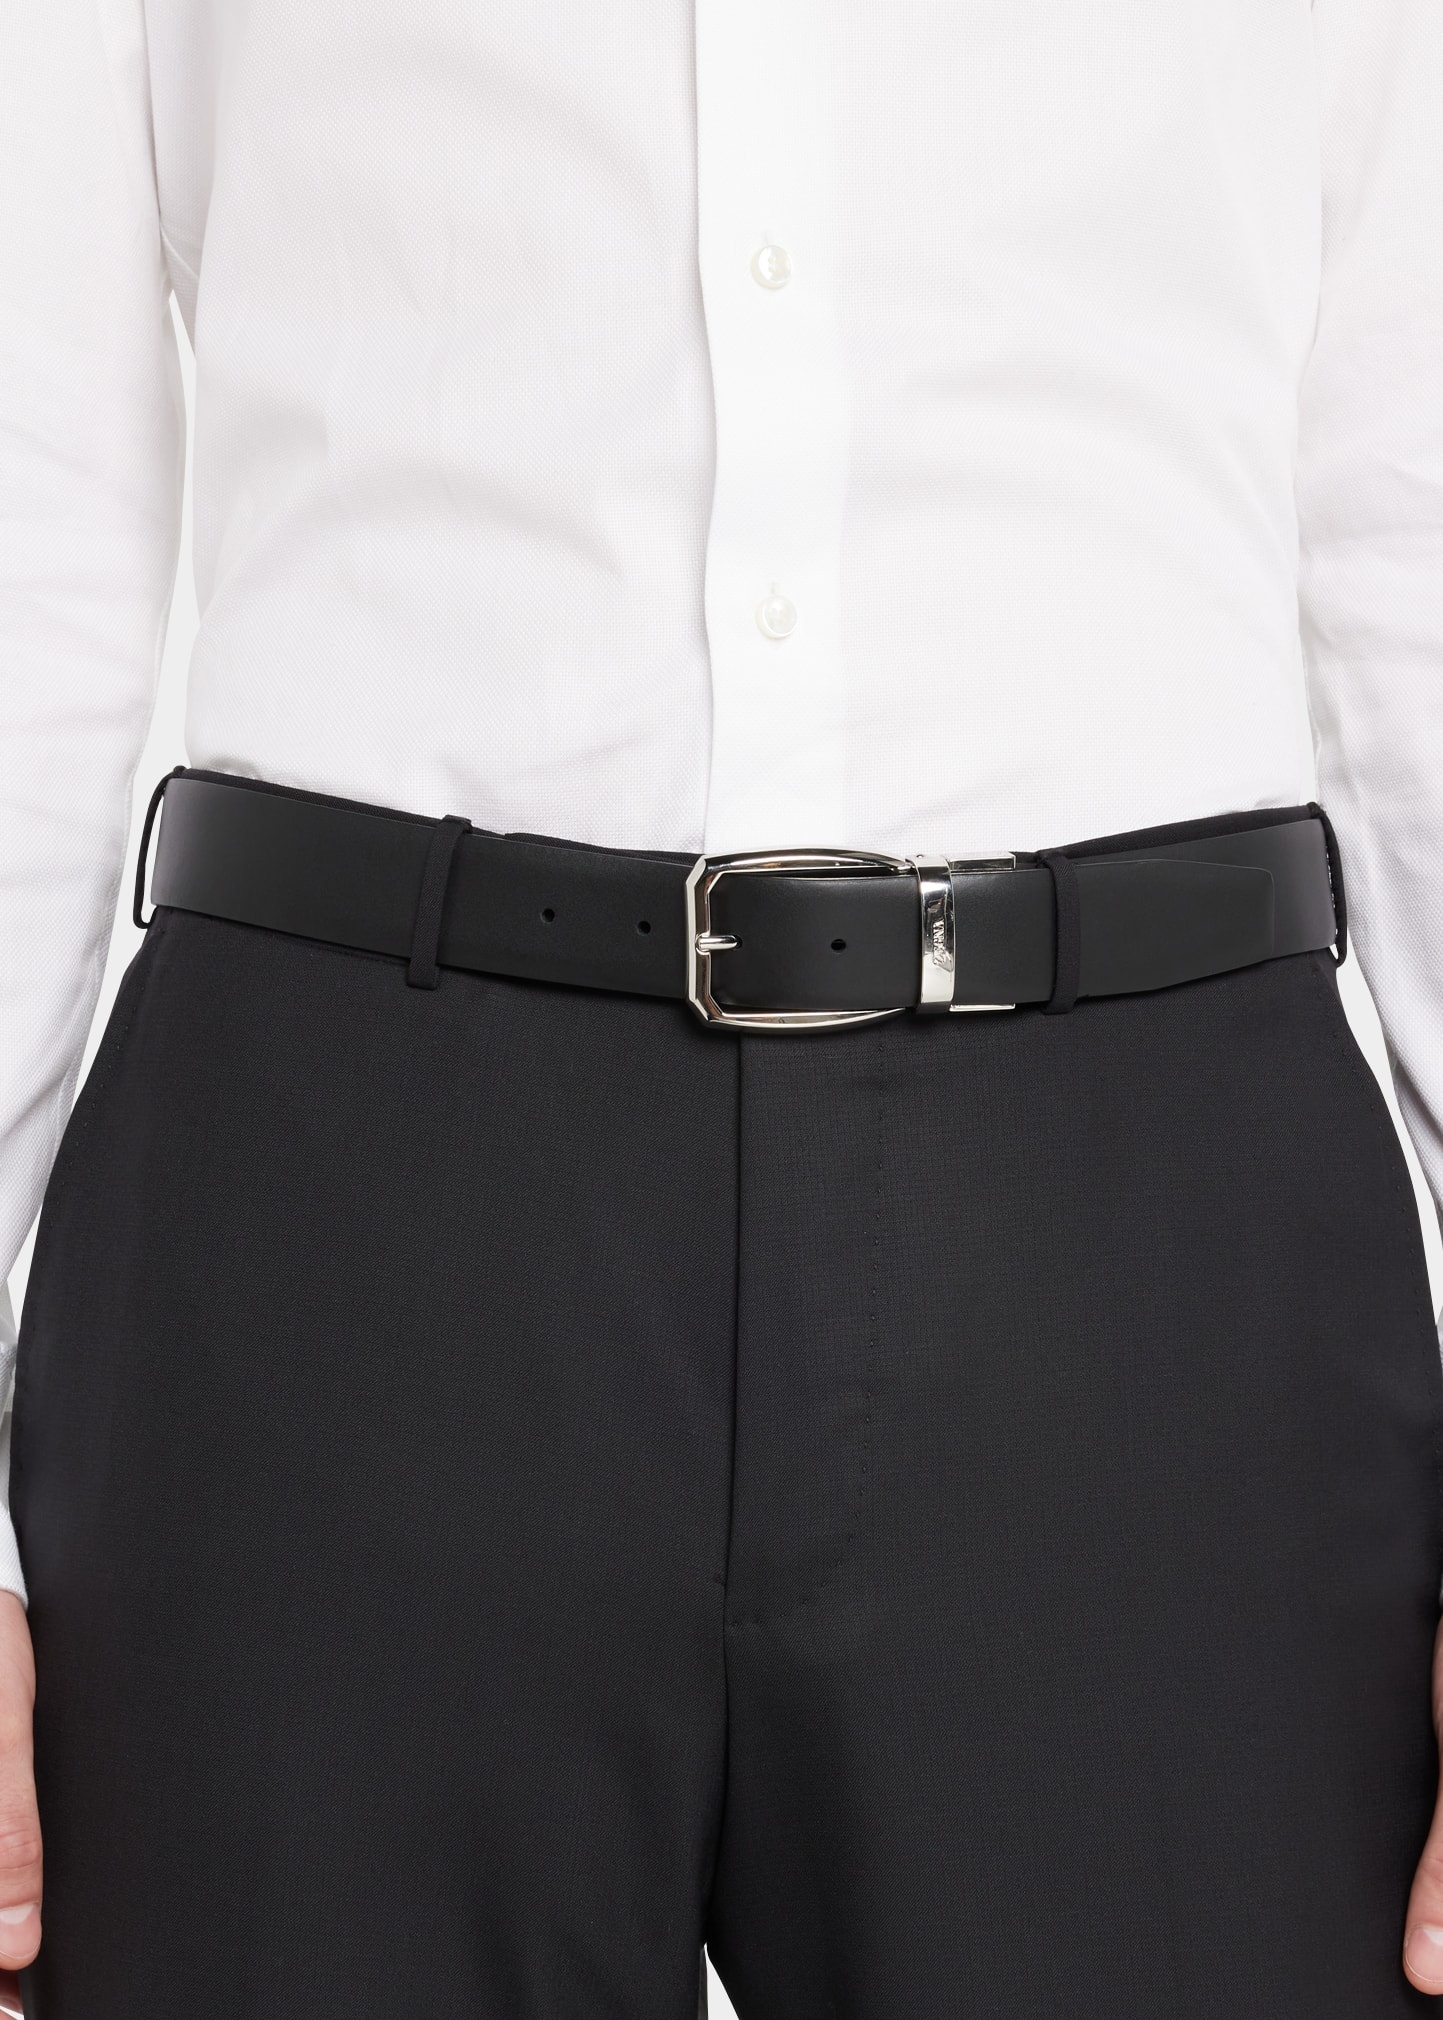 Men's Gioiello Adjustable Reversible Leather Belt - 2